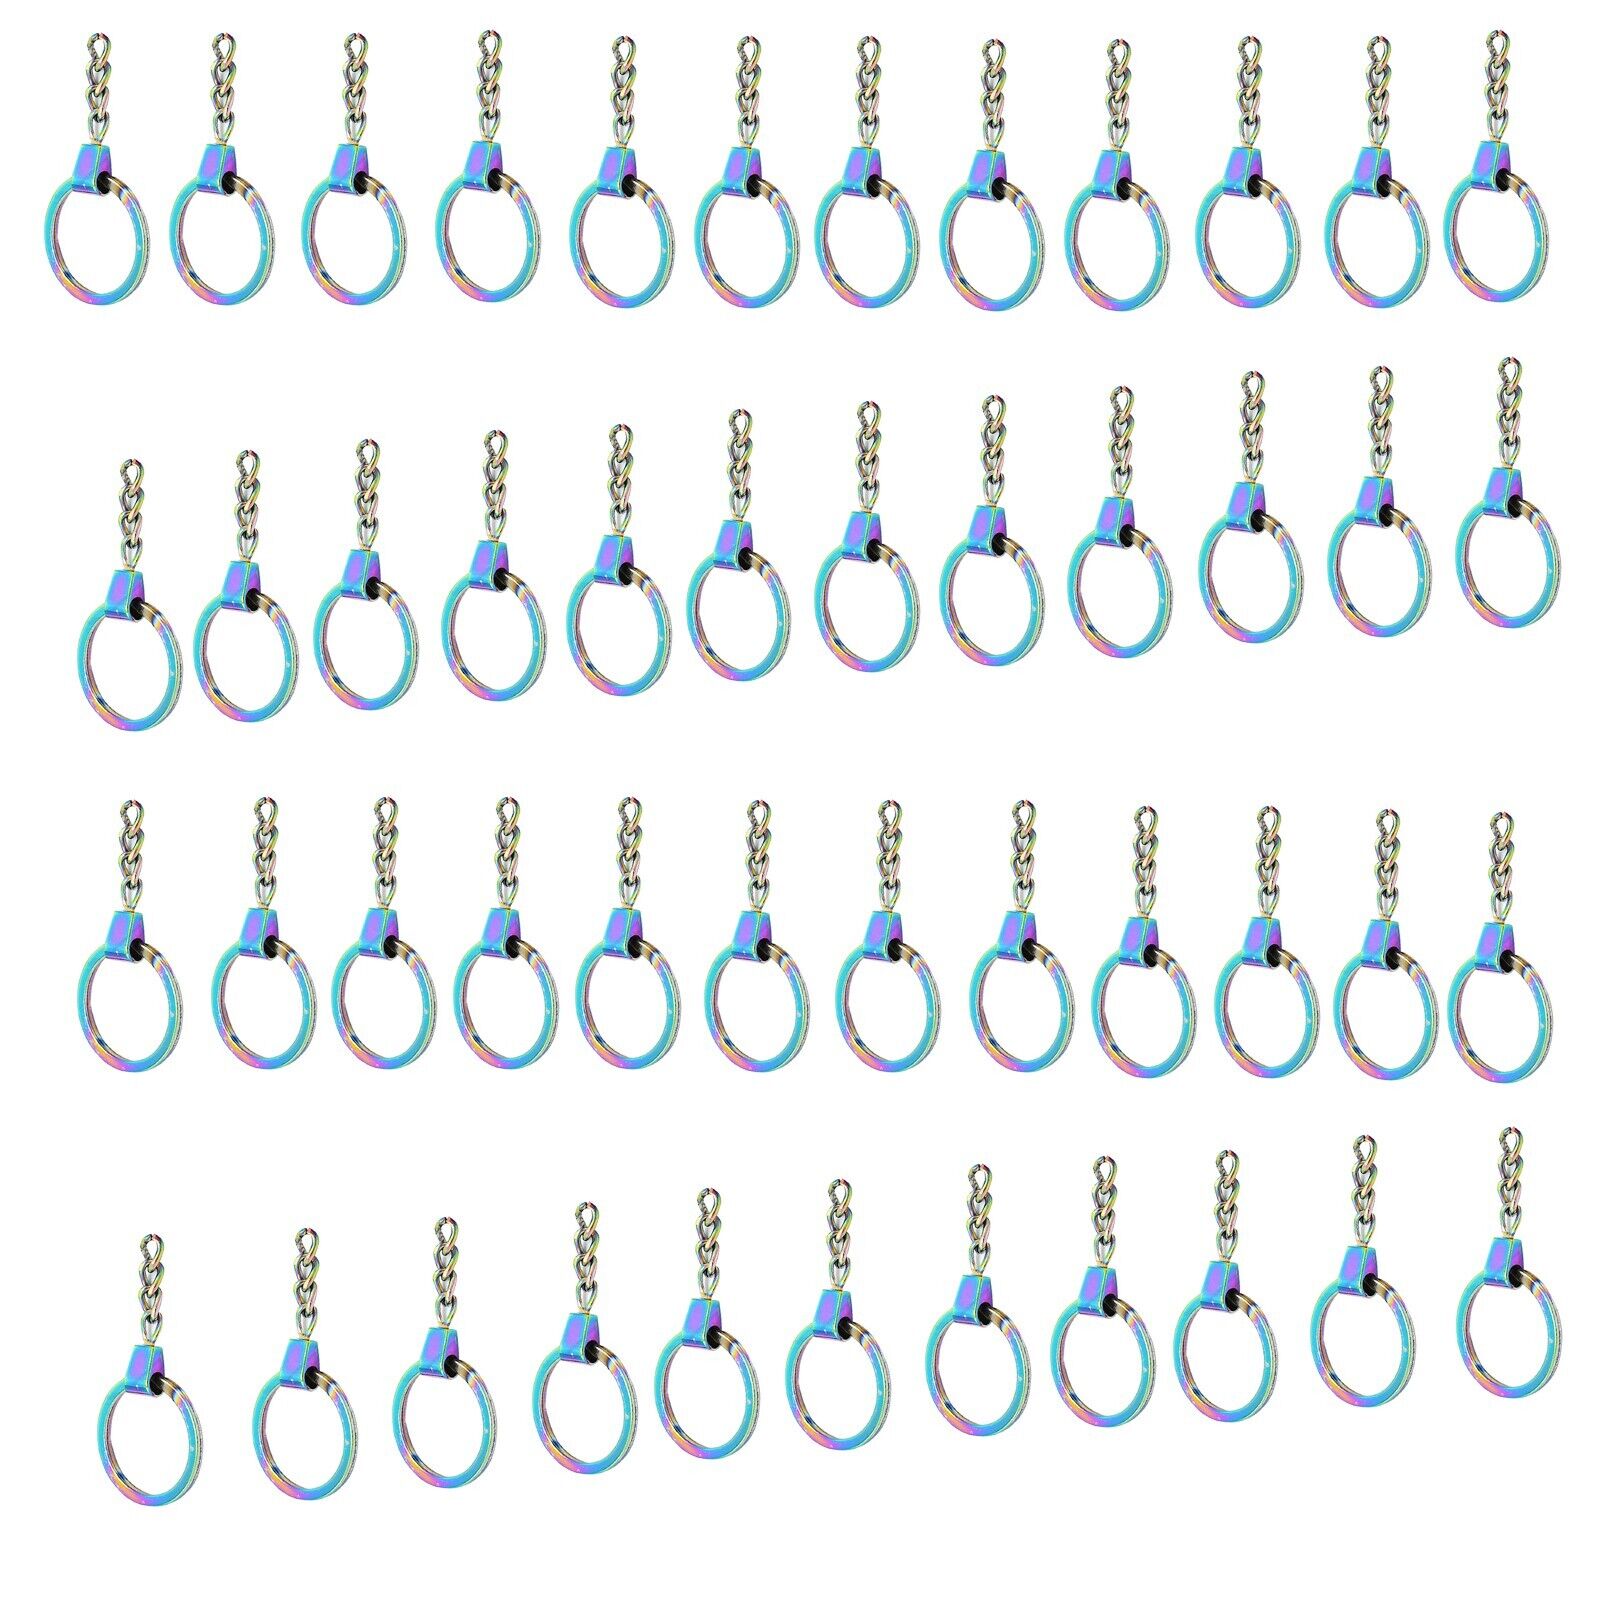 100 Pcs Key Chain Ring keychain DIY Wholesale Making Jewelry Keyrings Split ODM